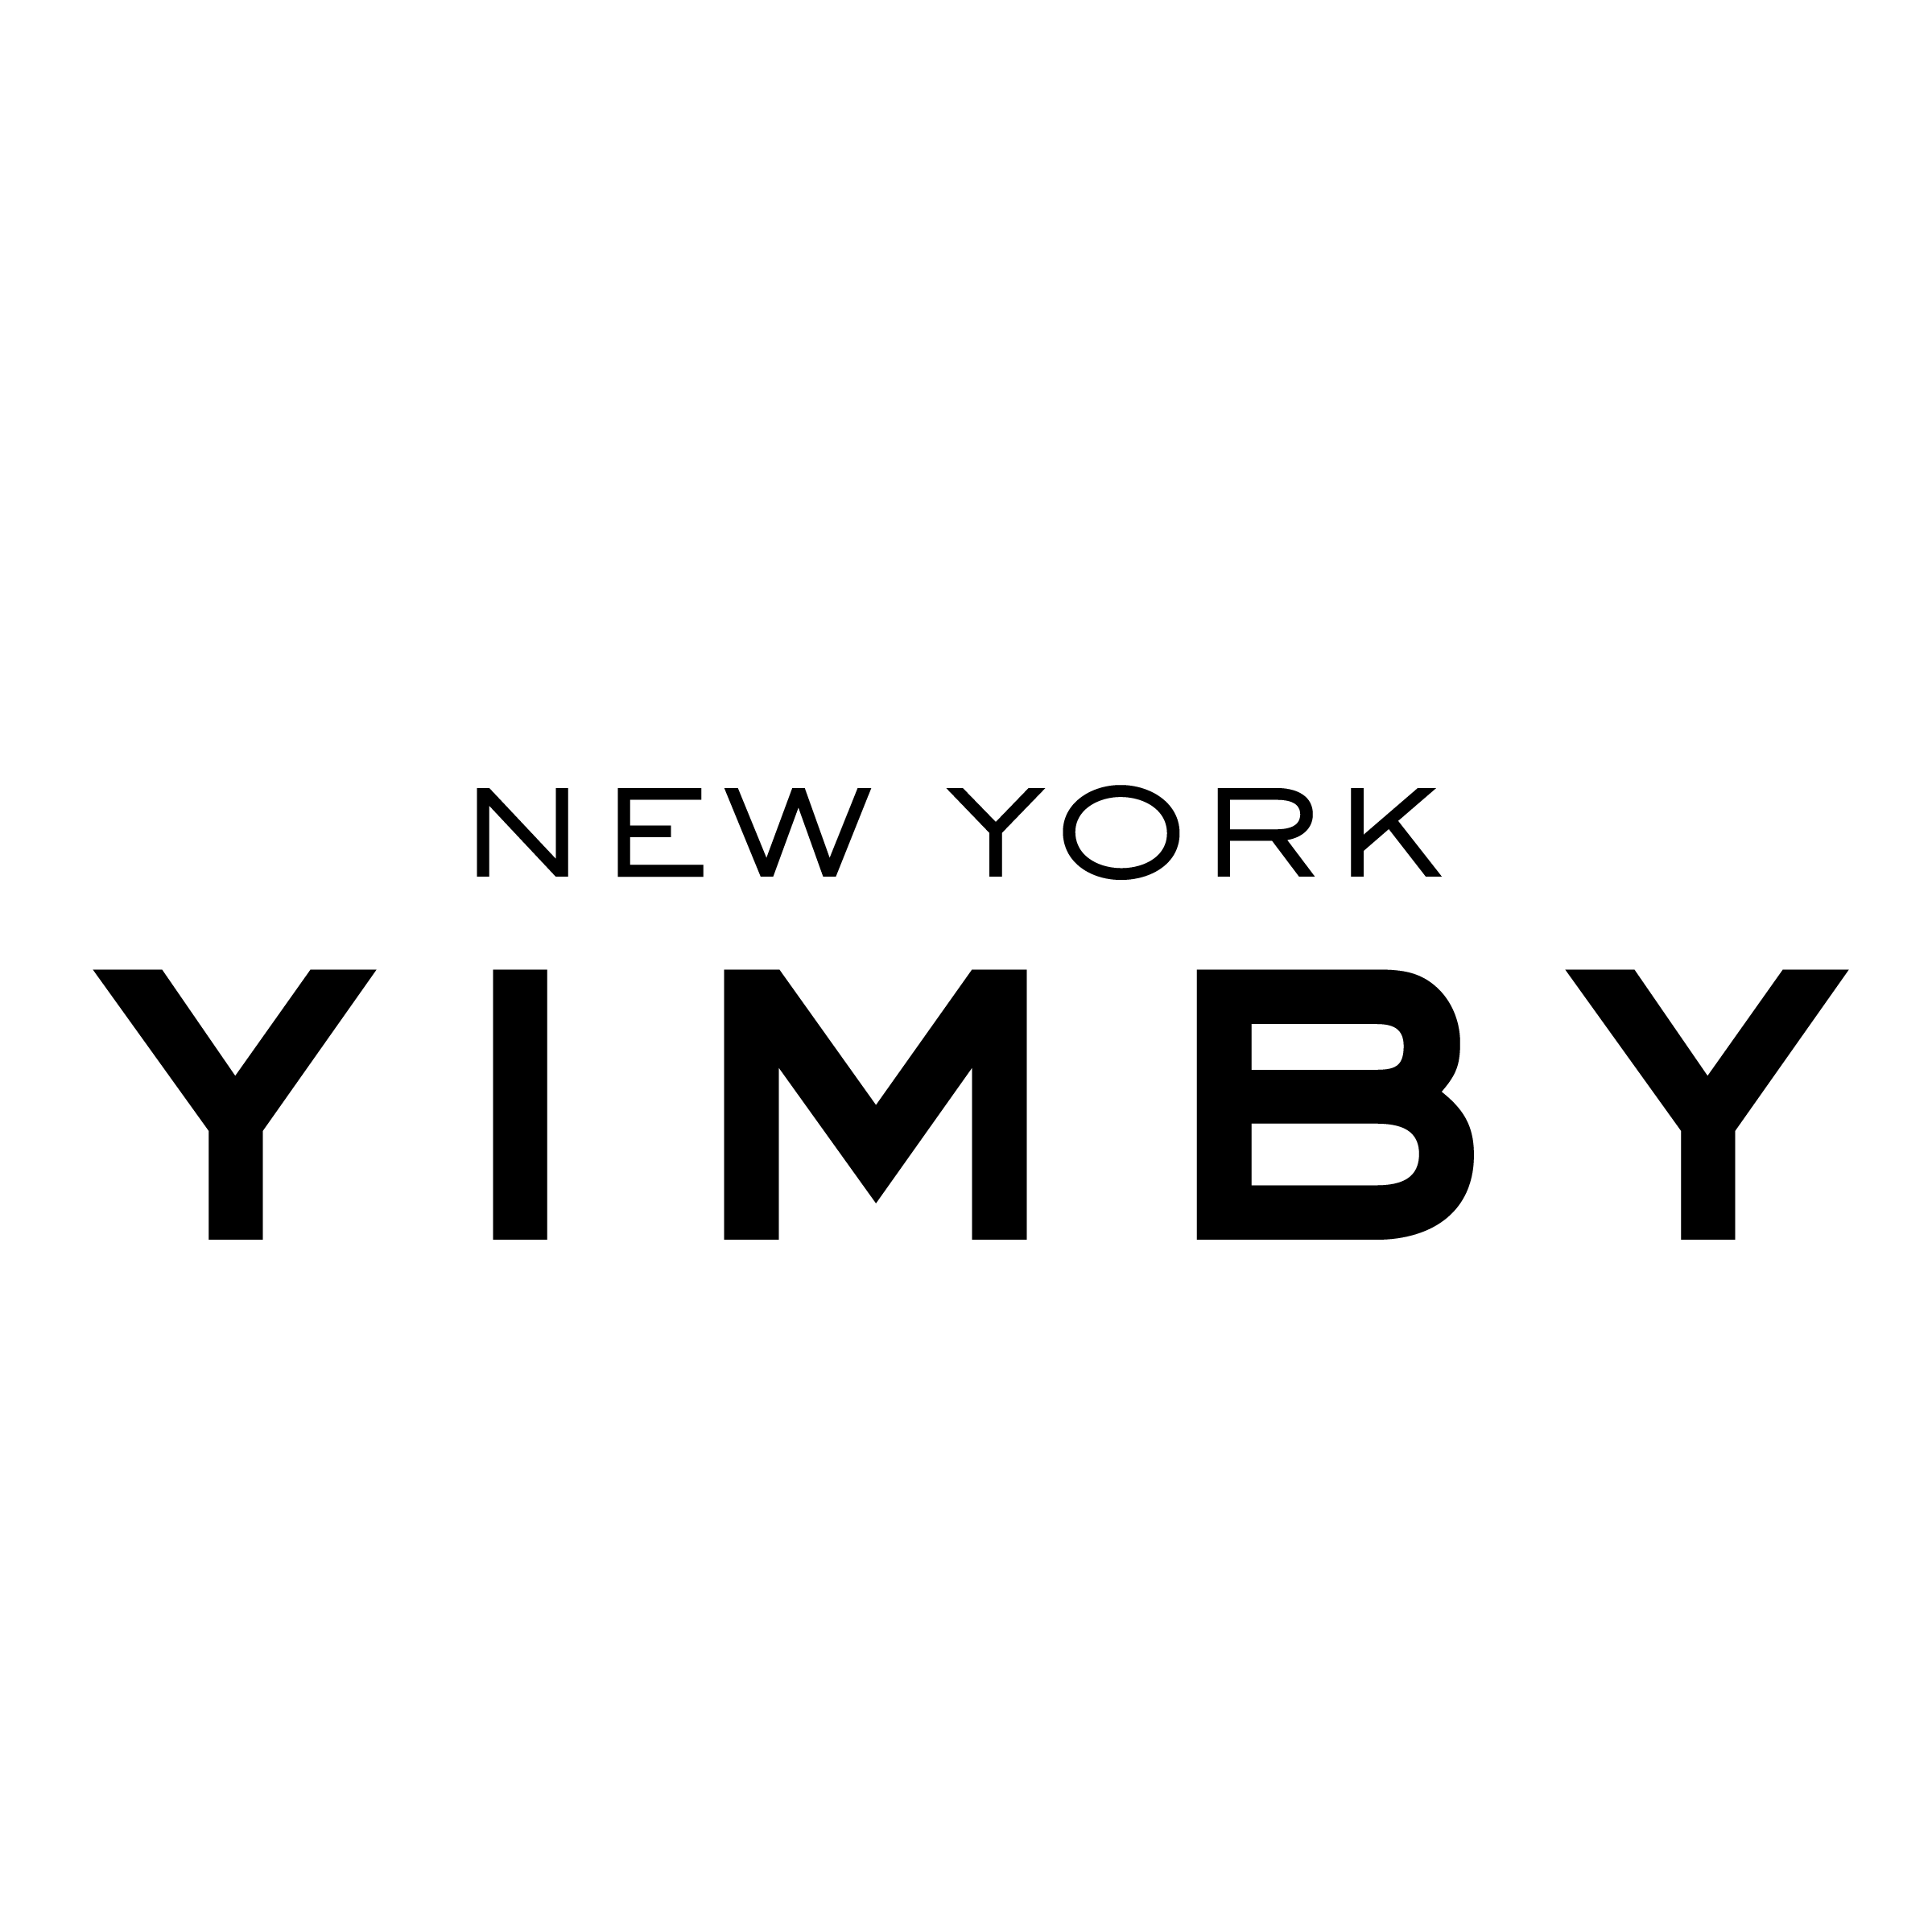 New York F Logo - New York YIMBY